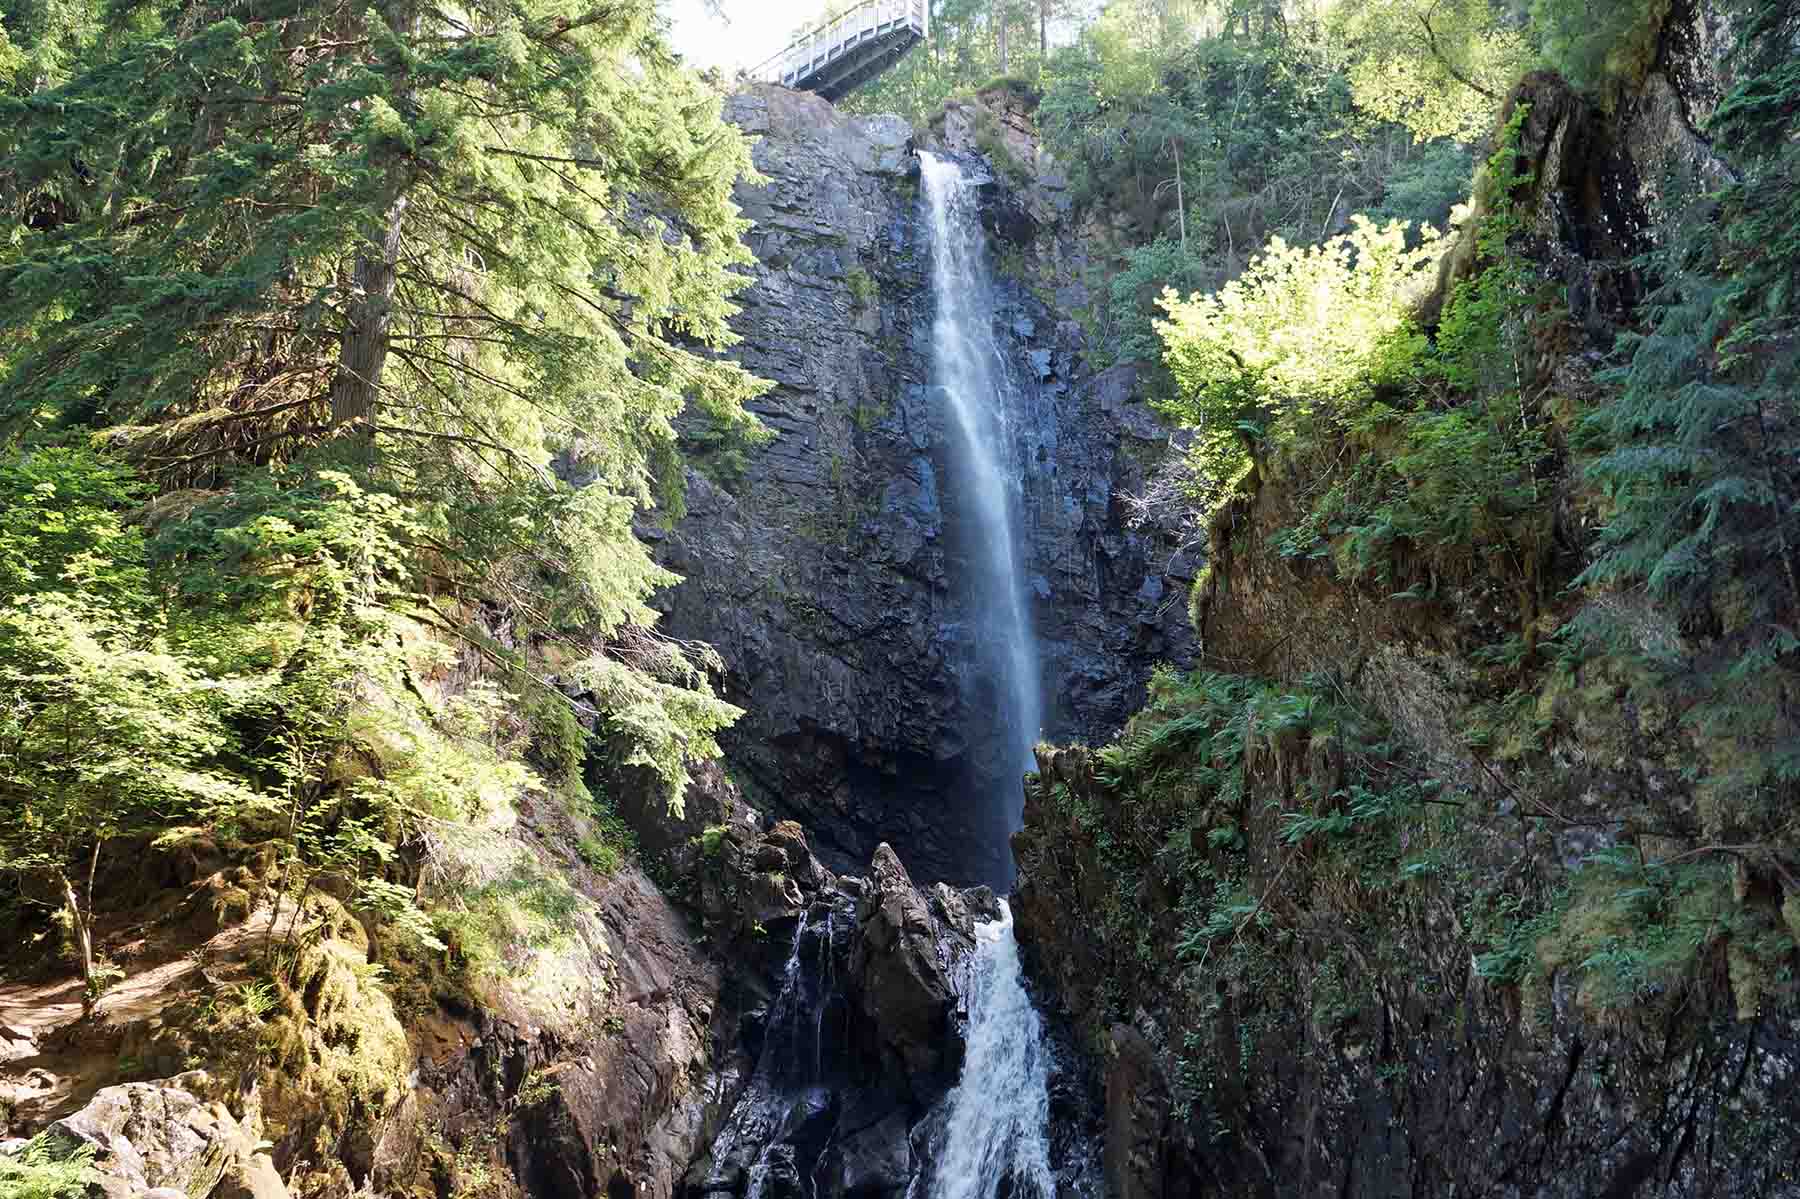 The Plodda Falls falling down 40metres with viewing platform above